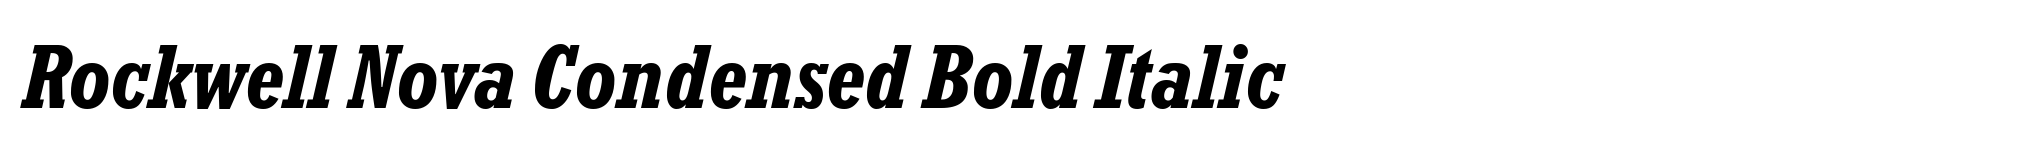 Rockwell Nova Condensed Bold Italic image